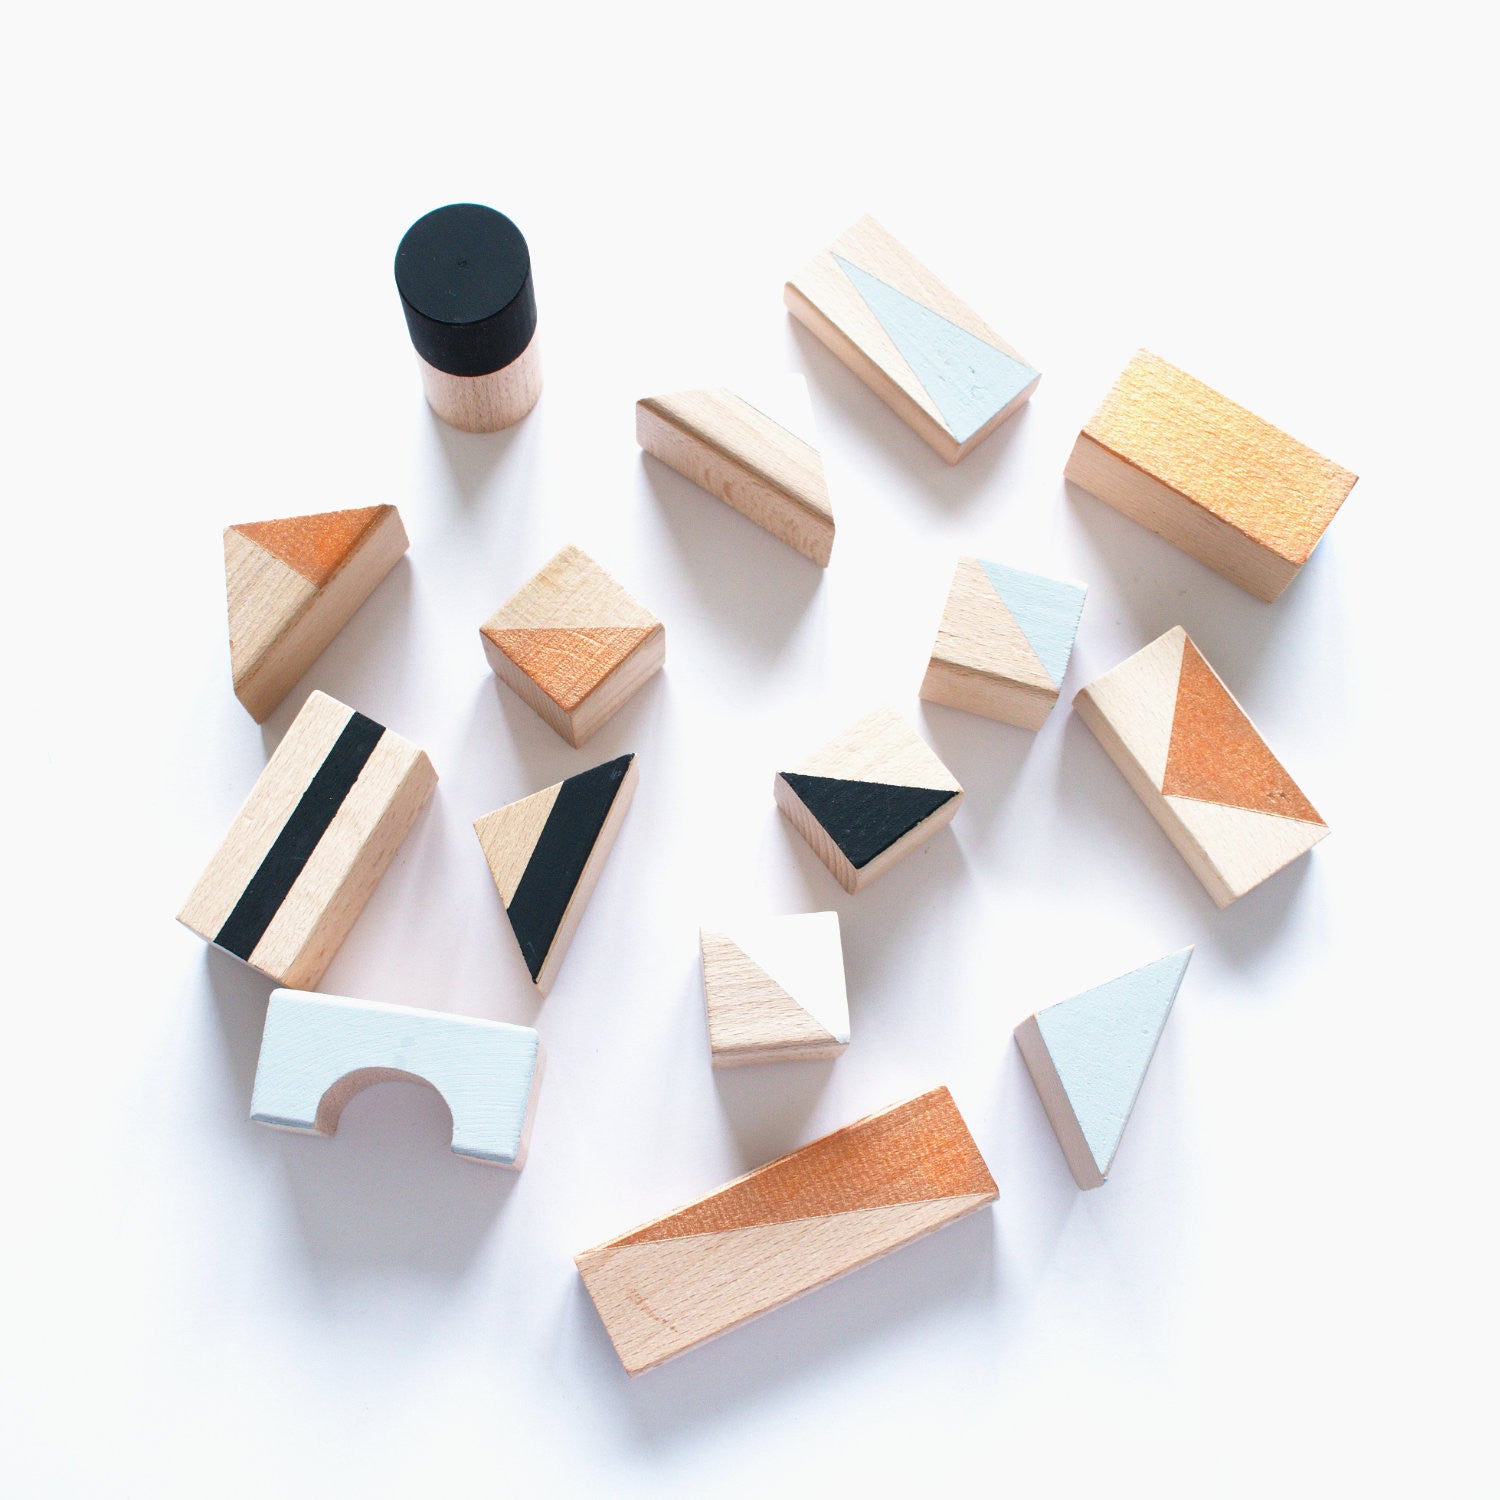 Wooden building blocks - Copper & Monochrome - Happy Little Folks